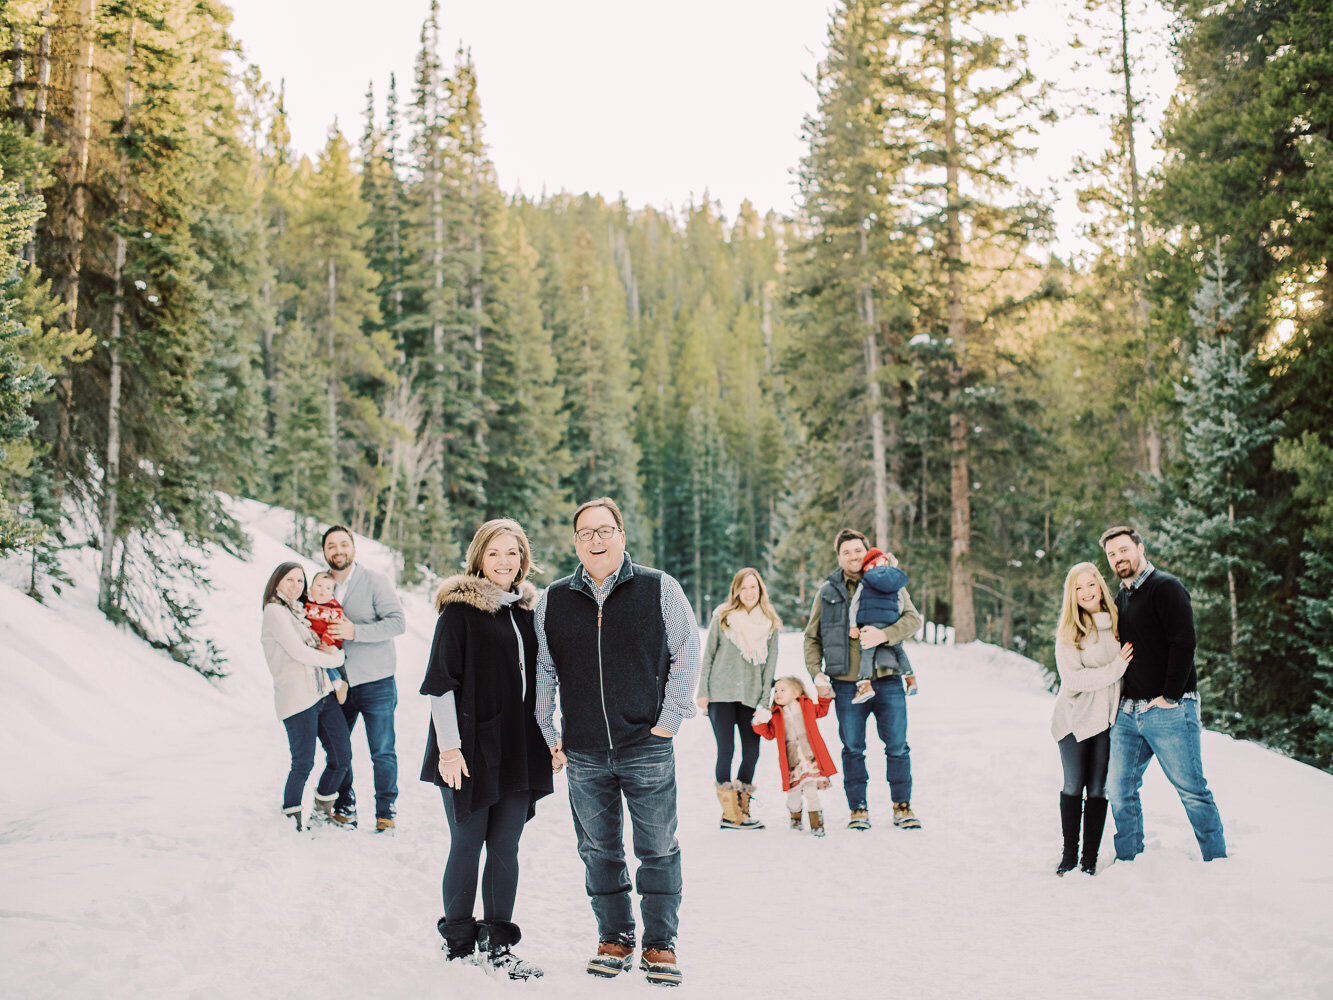 Colorado-Family-Photography-Vail-Mountaintop-Winter-Snowy-Christmas-Photoshoot10